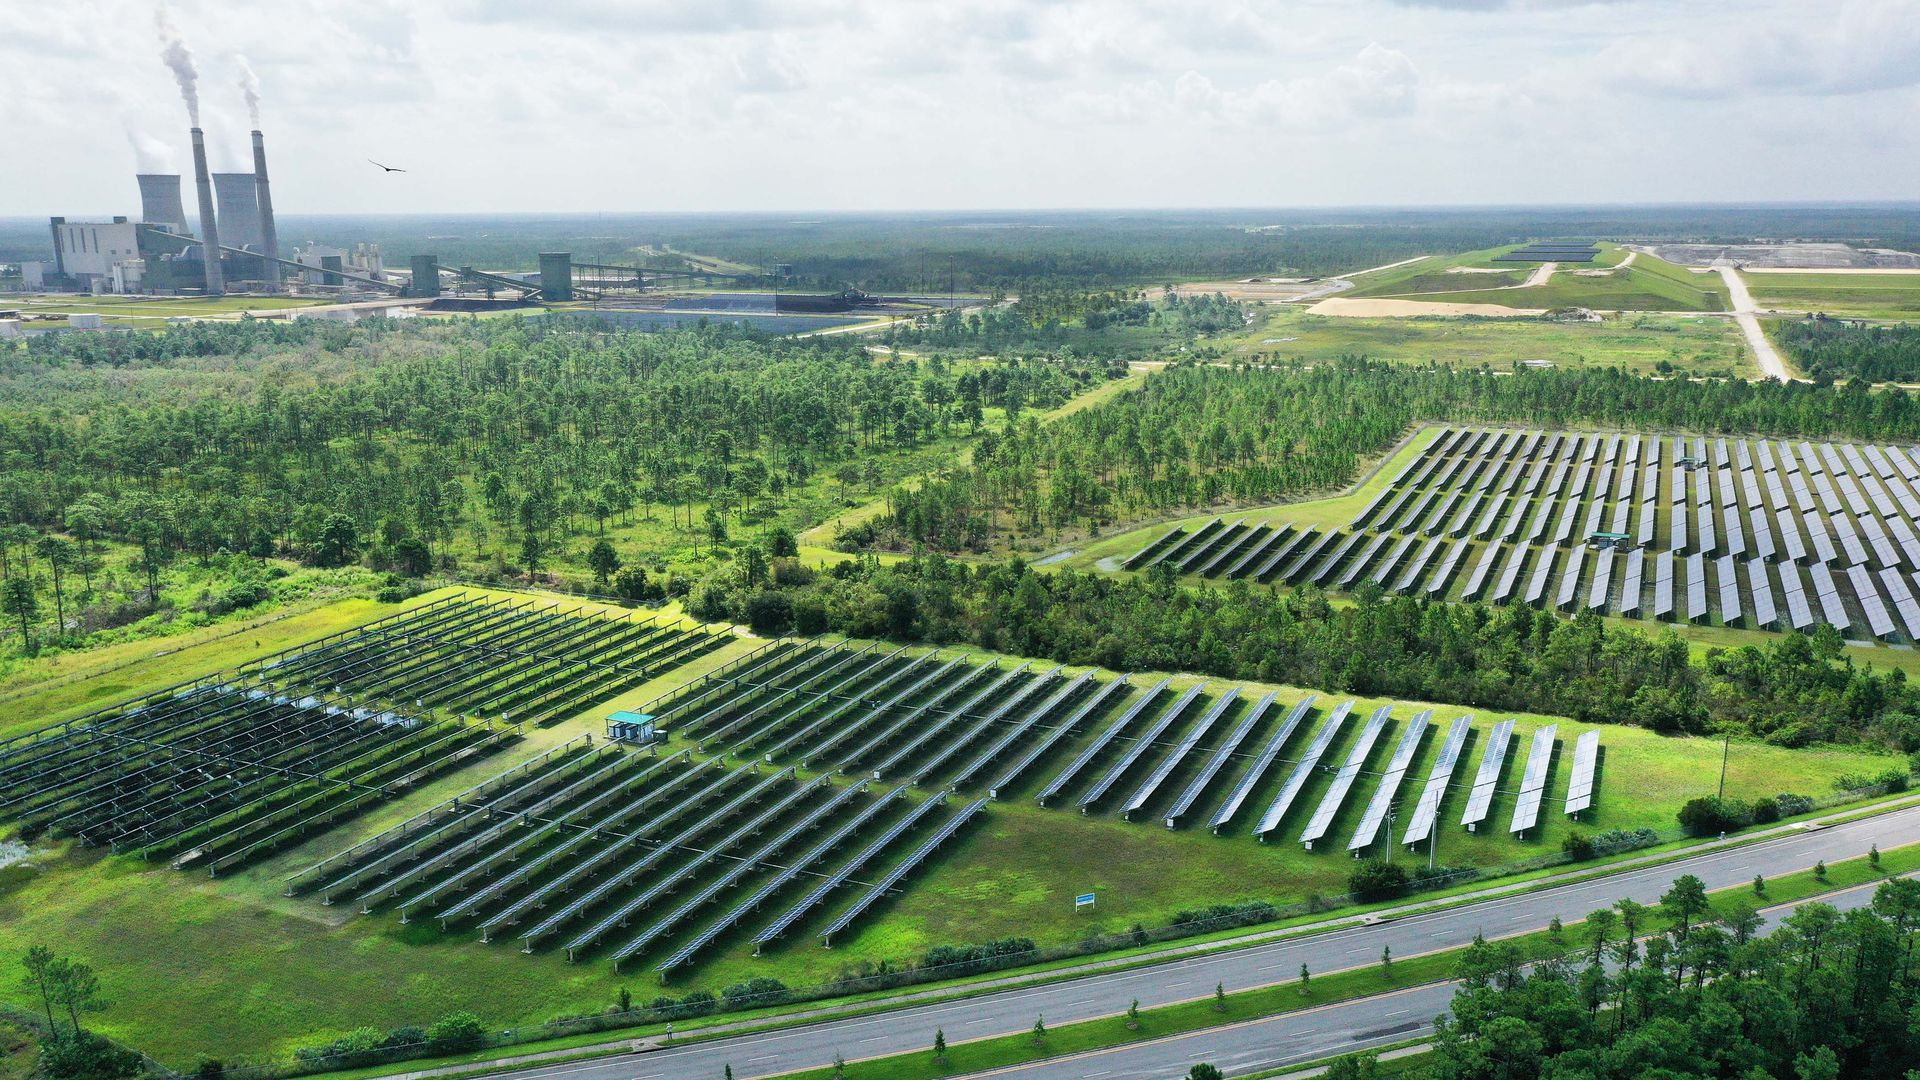 The 6 megawatt Stanton Solar Farm outside of Orlando, Florida.